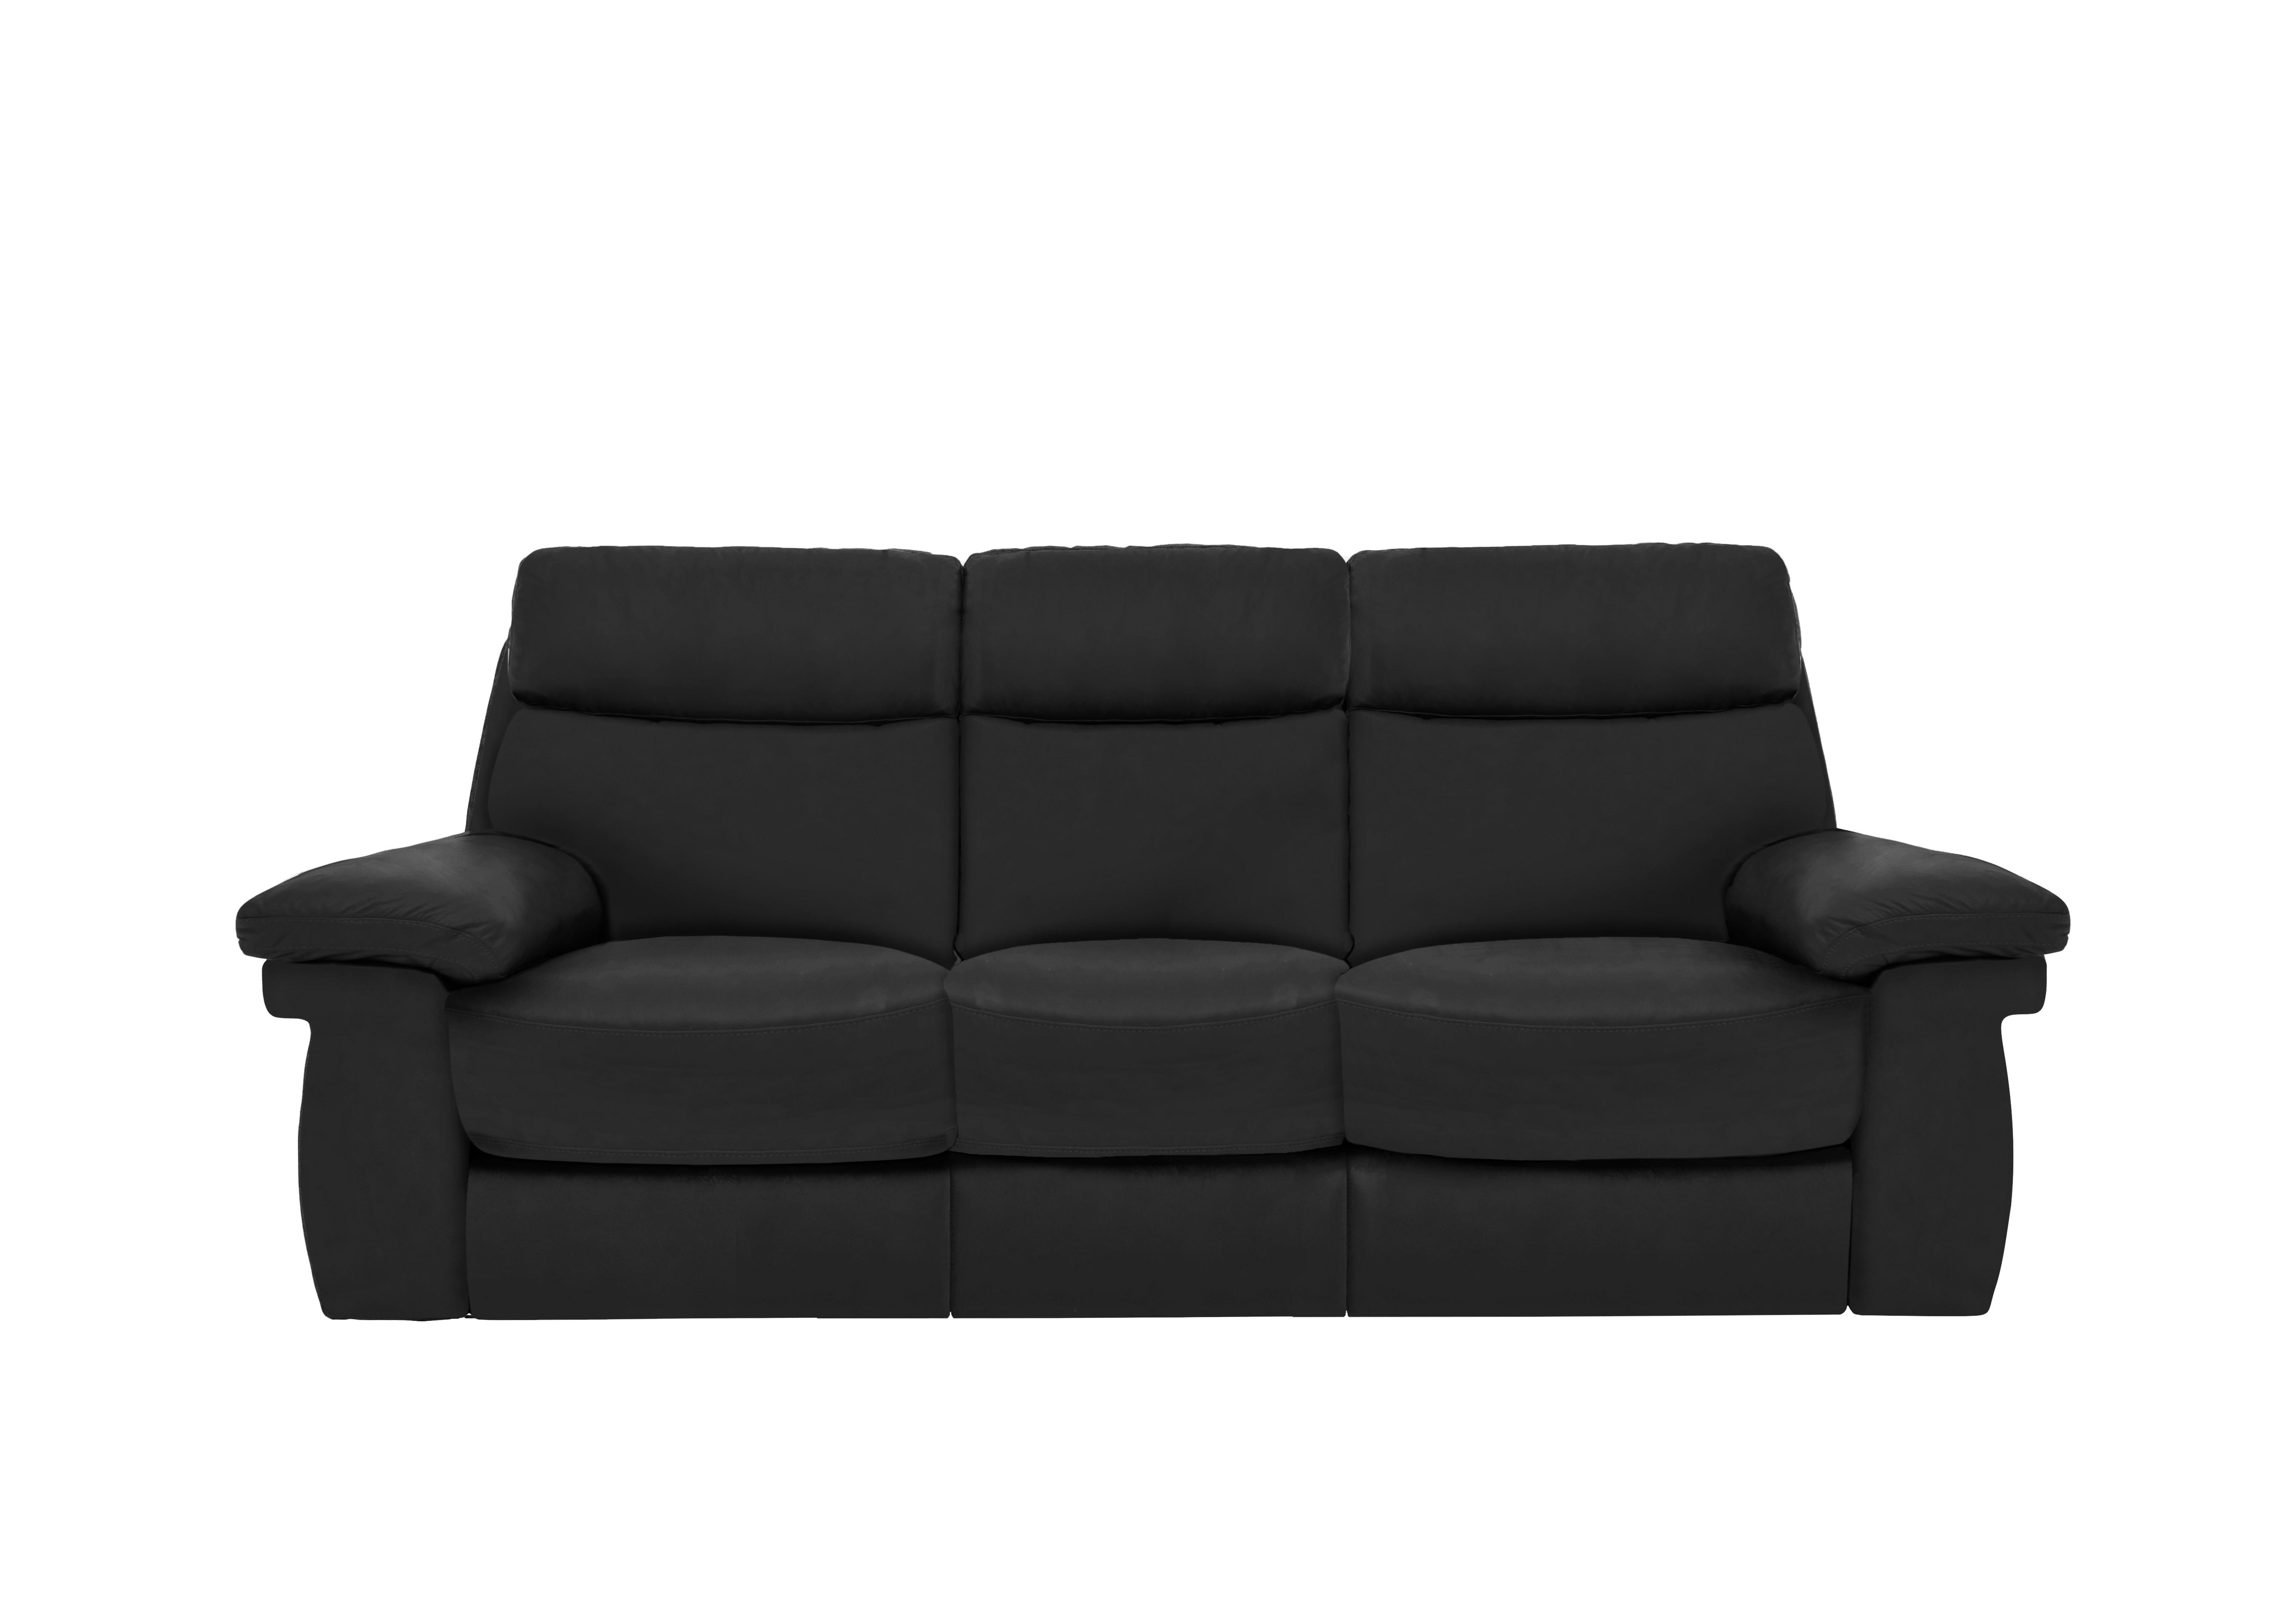 Serene 3 Seater Leather Sofa in Bx-023c Black on Furniture Village